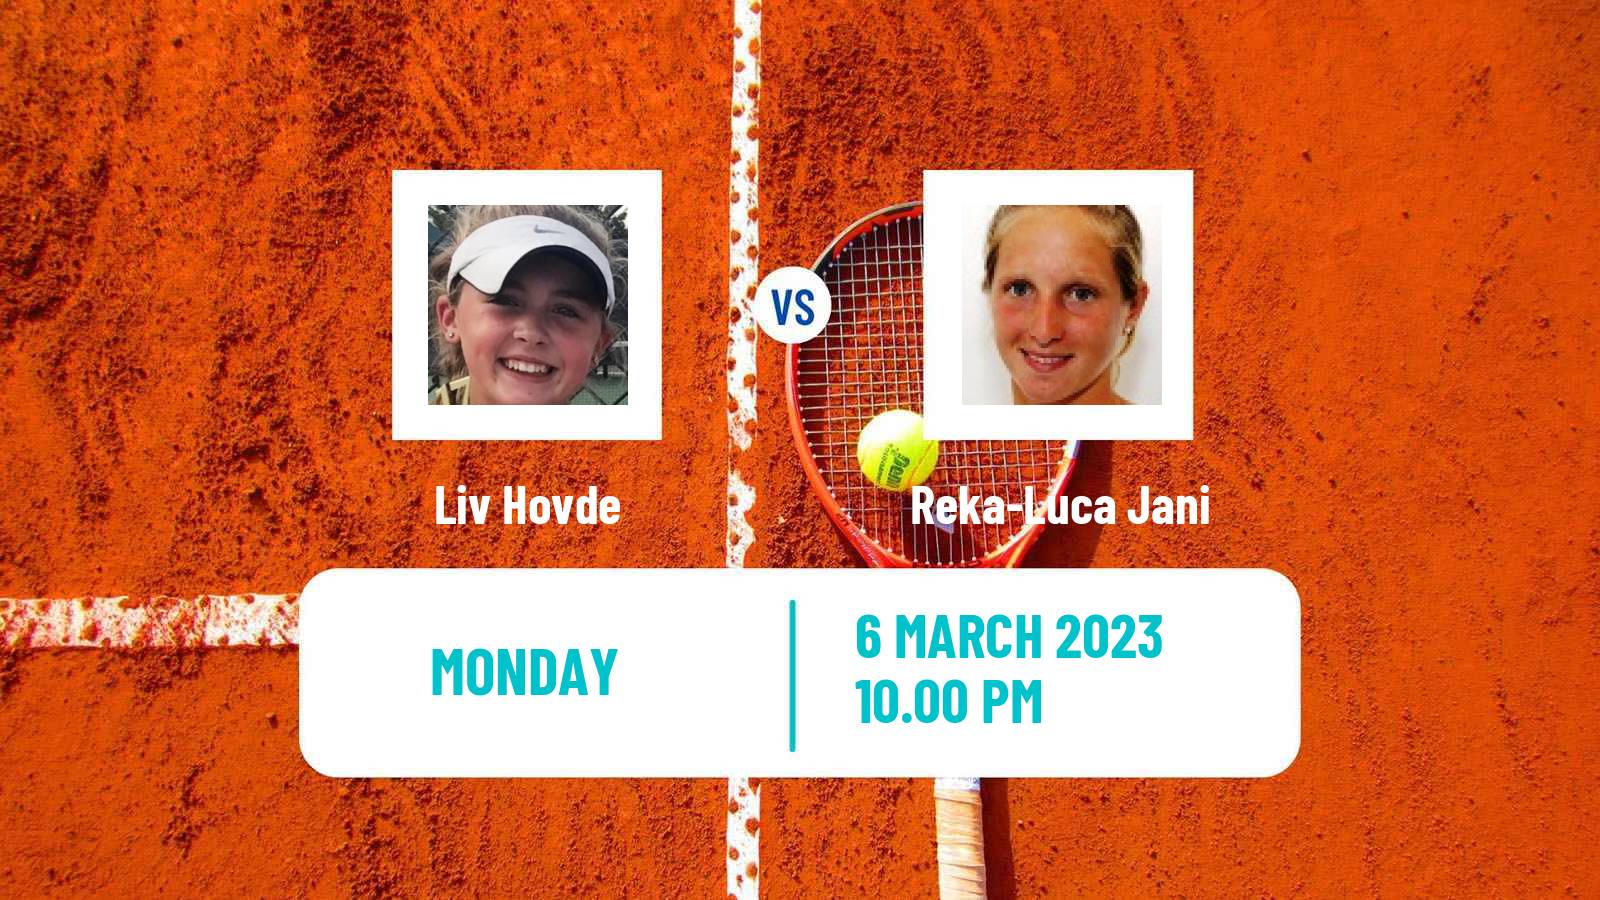 Tennis WTA Indian Wells Liv Hovde - Reka-Luca Jani